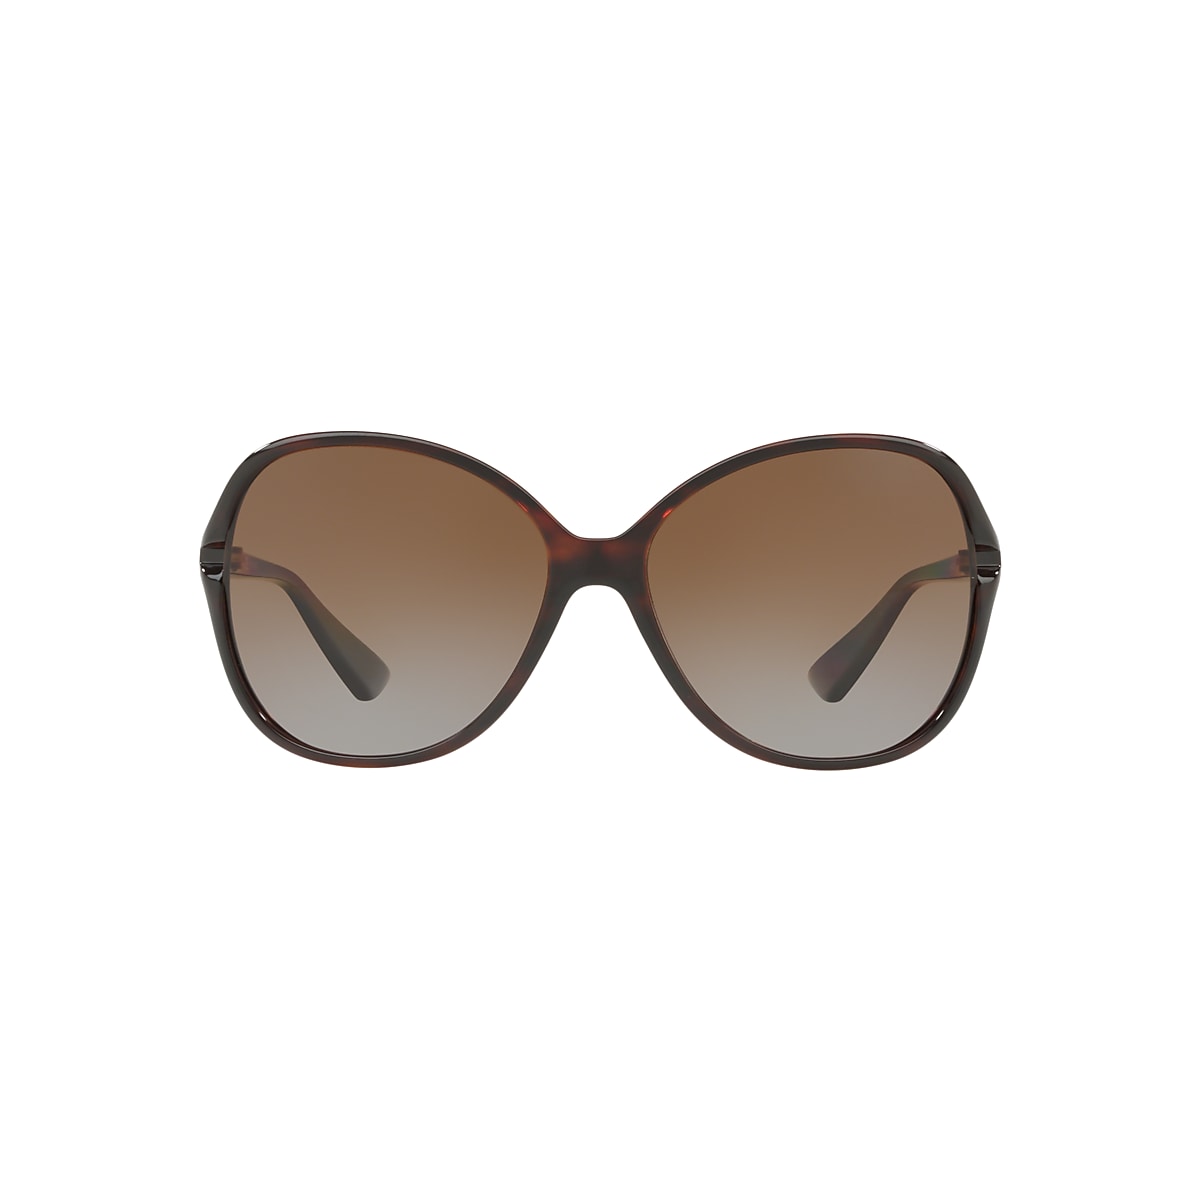 SUNGLASS HUT COLLECTION HU2001 Brown - Woman Sunglasses, Polar Brown  Gradient Grey Lens